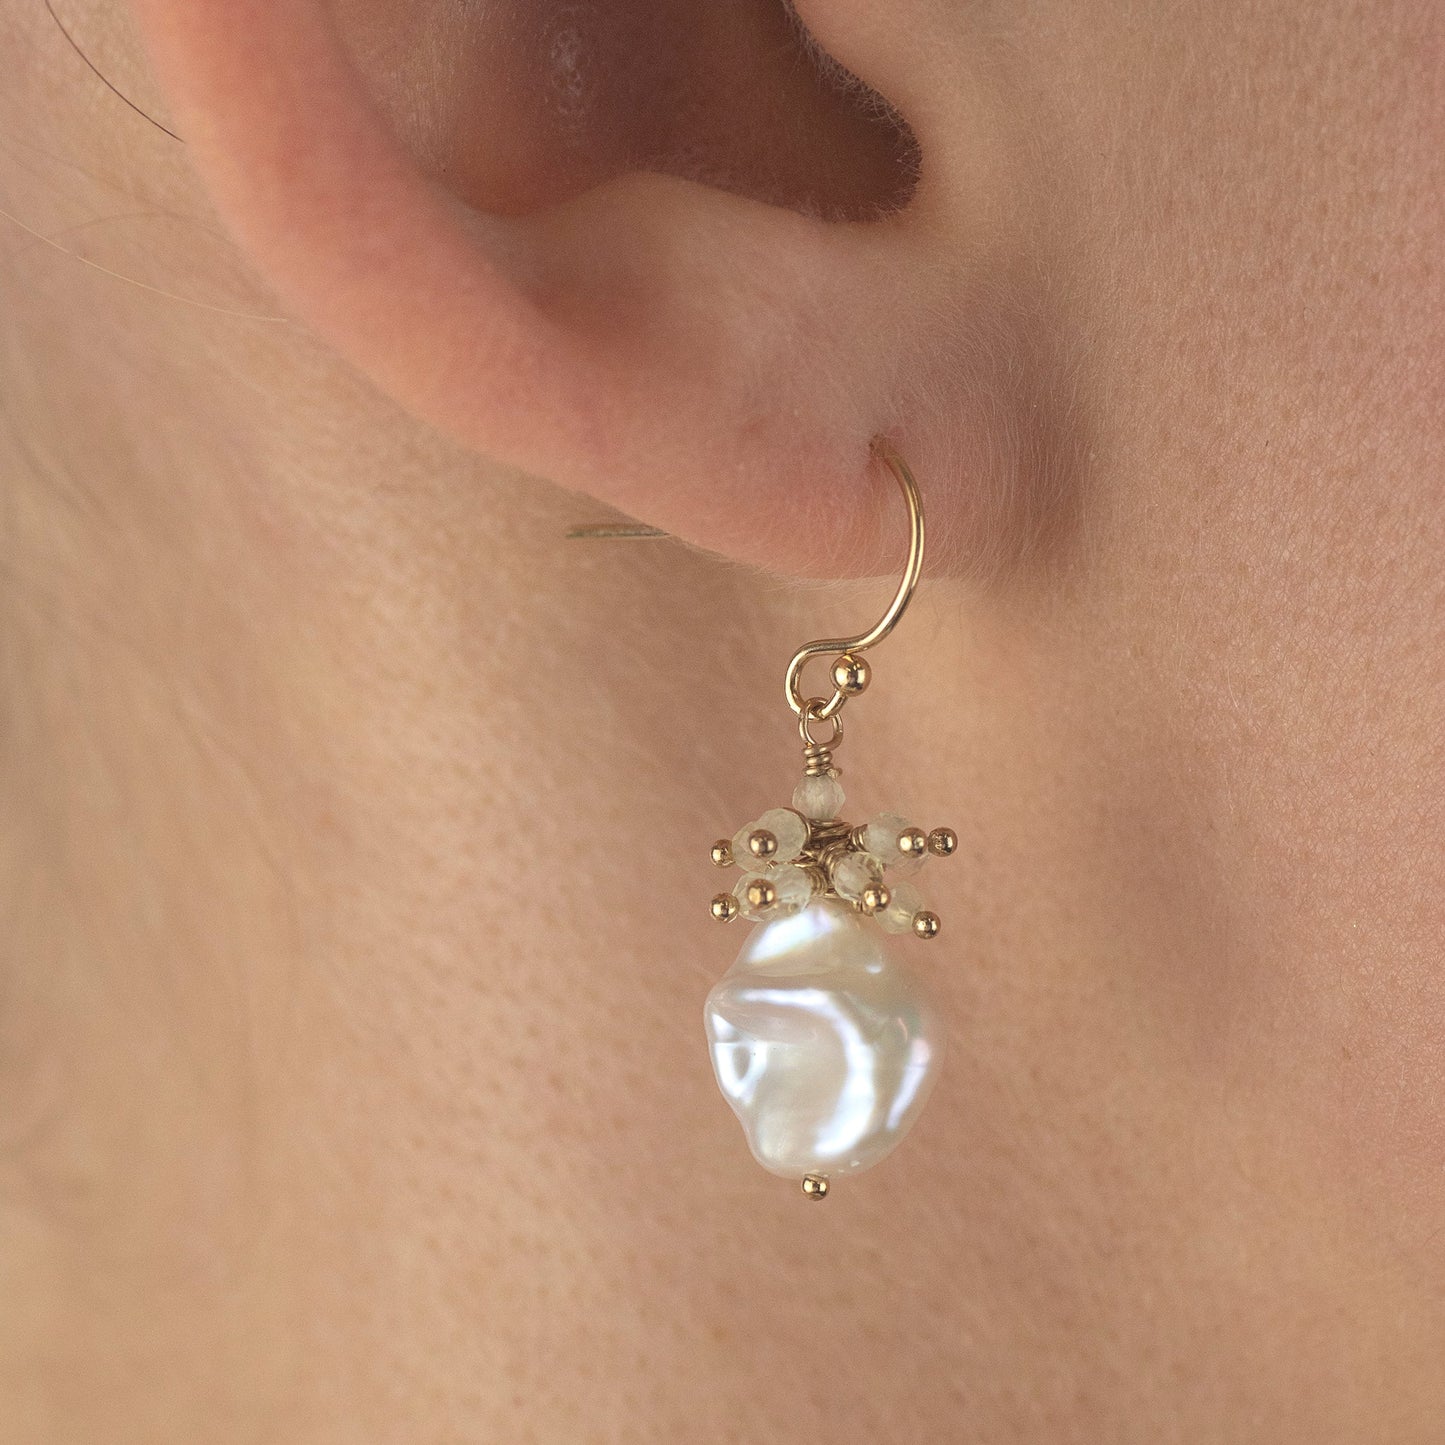 Jane Austen Inspired - Coral & Pearl Earrings - Silver & Gold